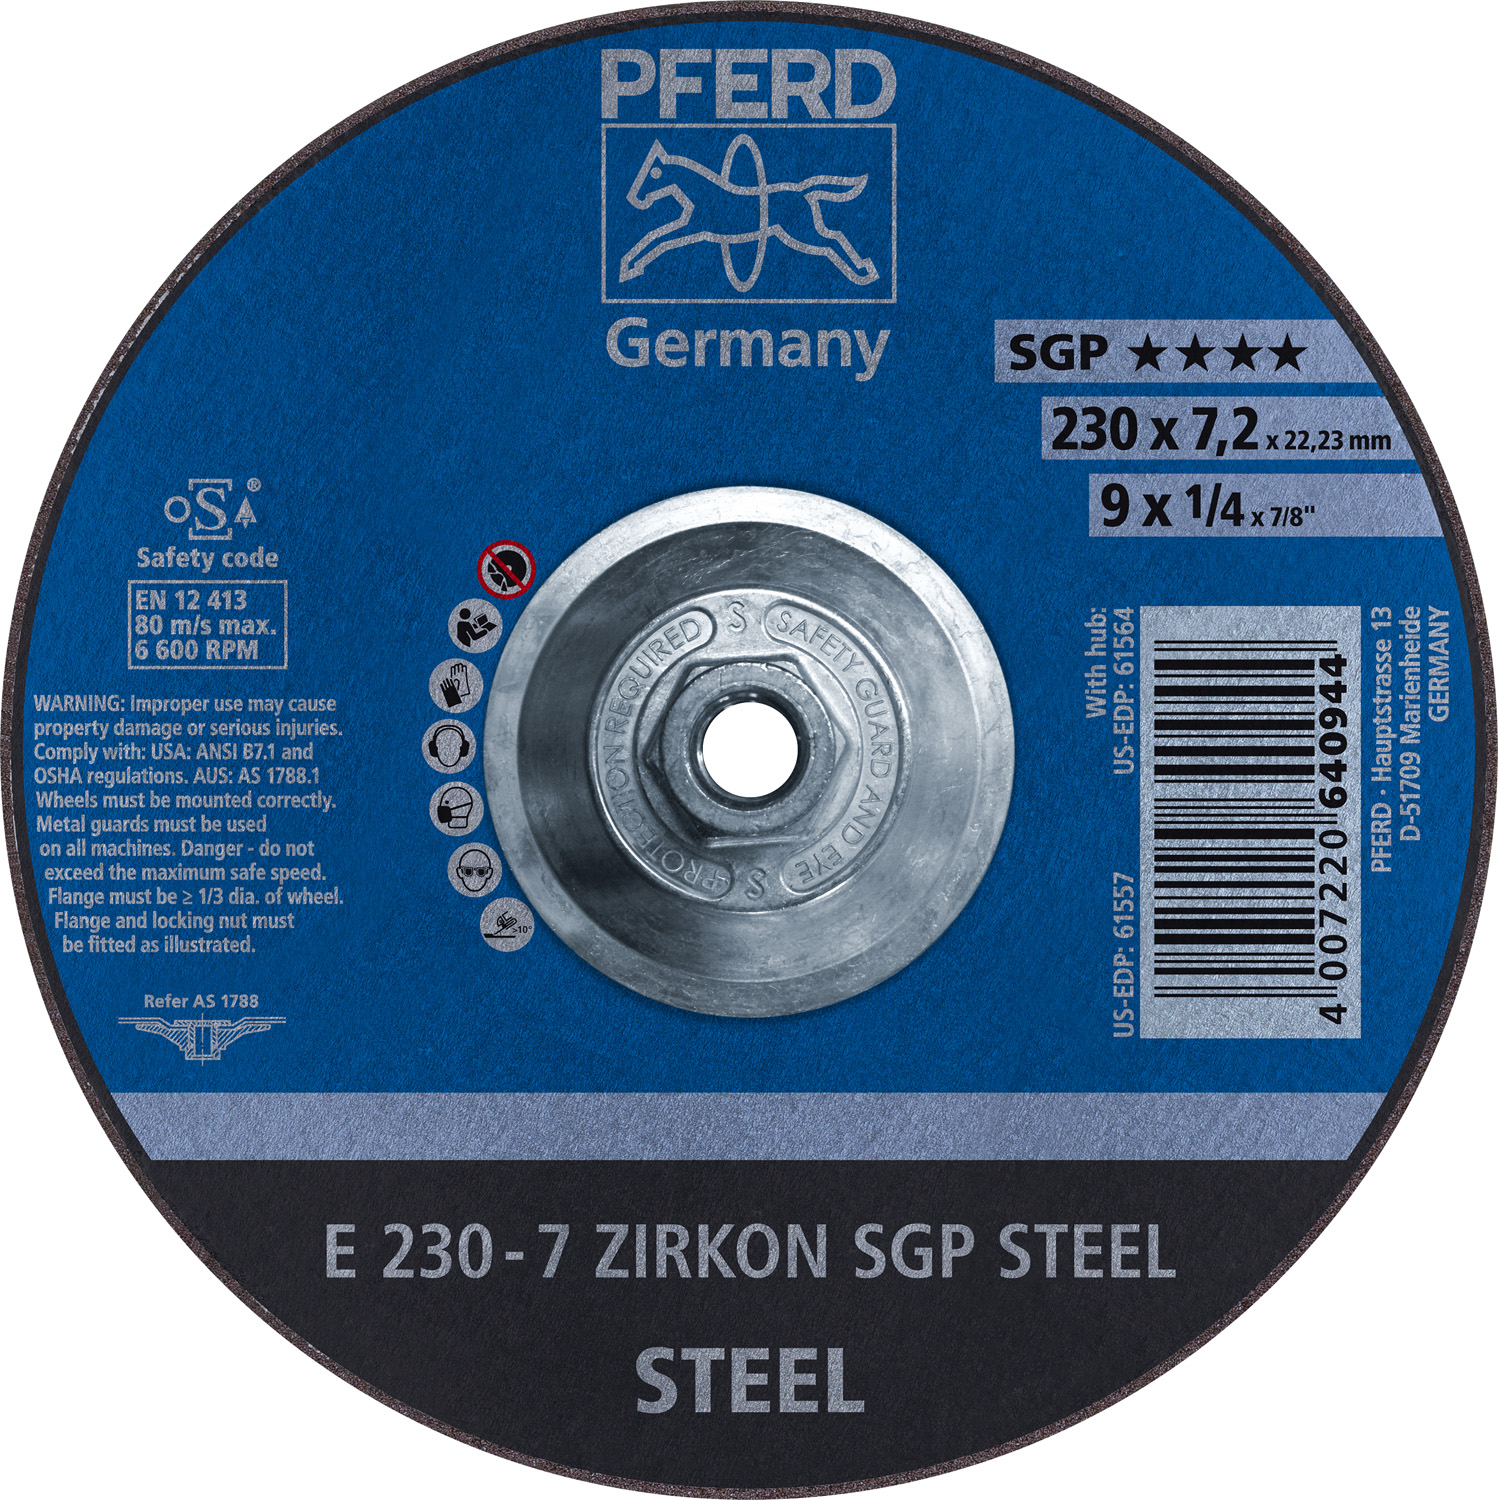 9" x 1/4 Grinding Wheel, 5/8-11 Thd. ZIRKON SGP STEEL - Type 27